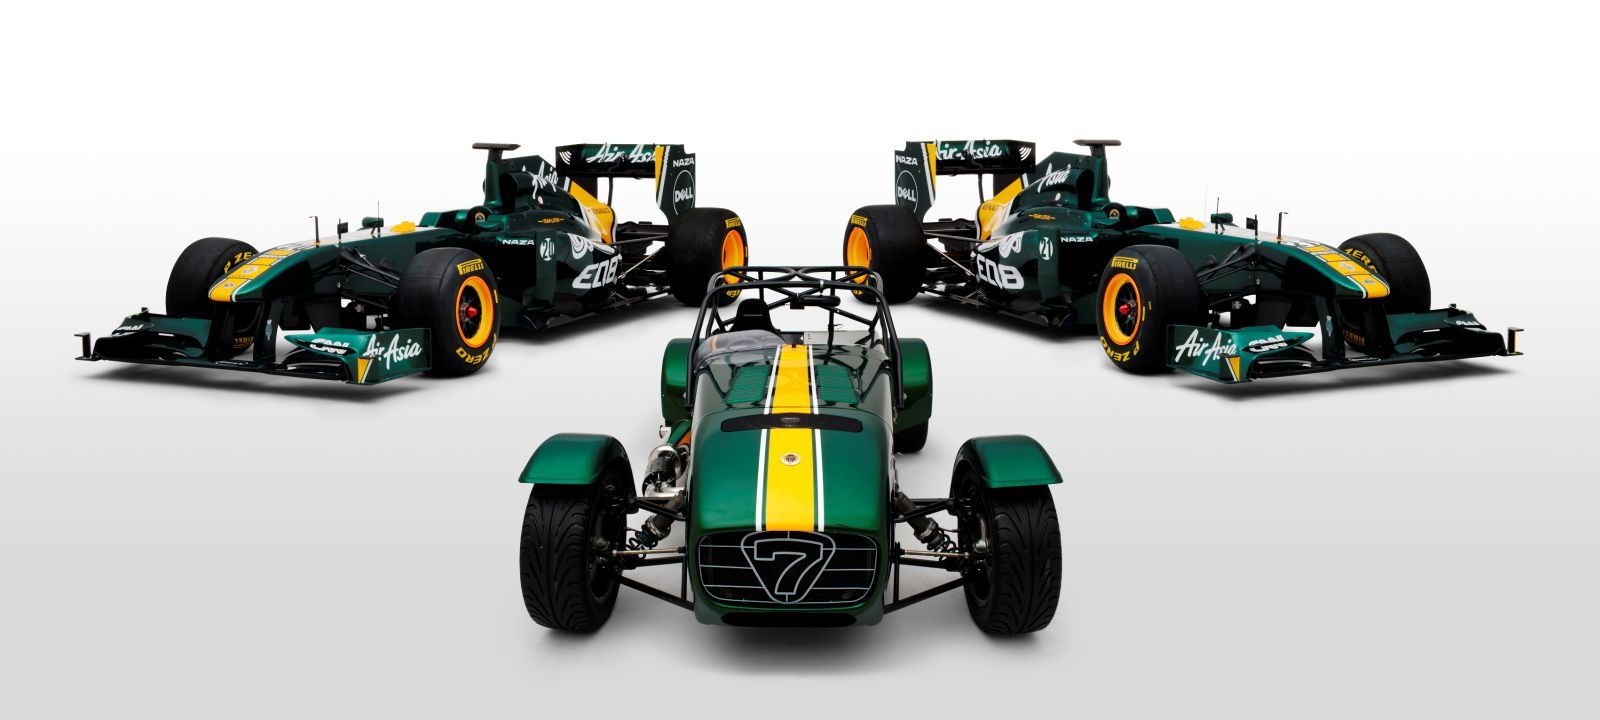 Caterham Seven Team Lotus Special Edition şi monopostul Team Lotus